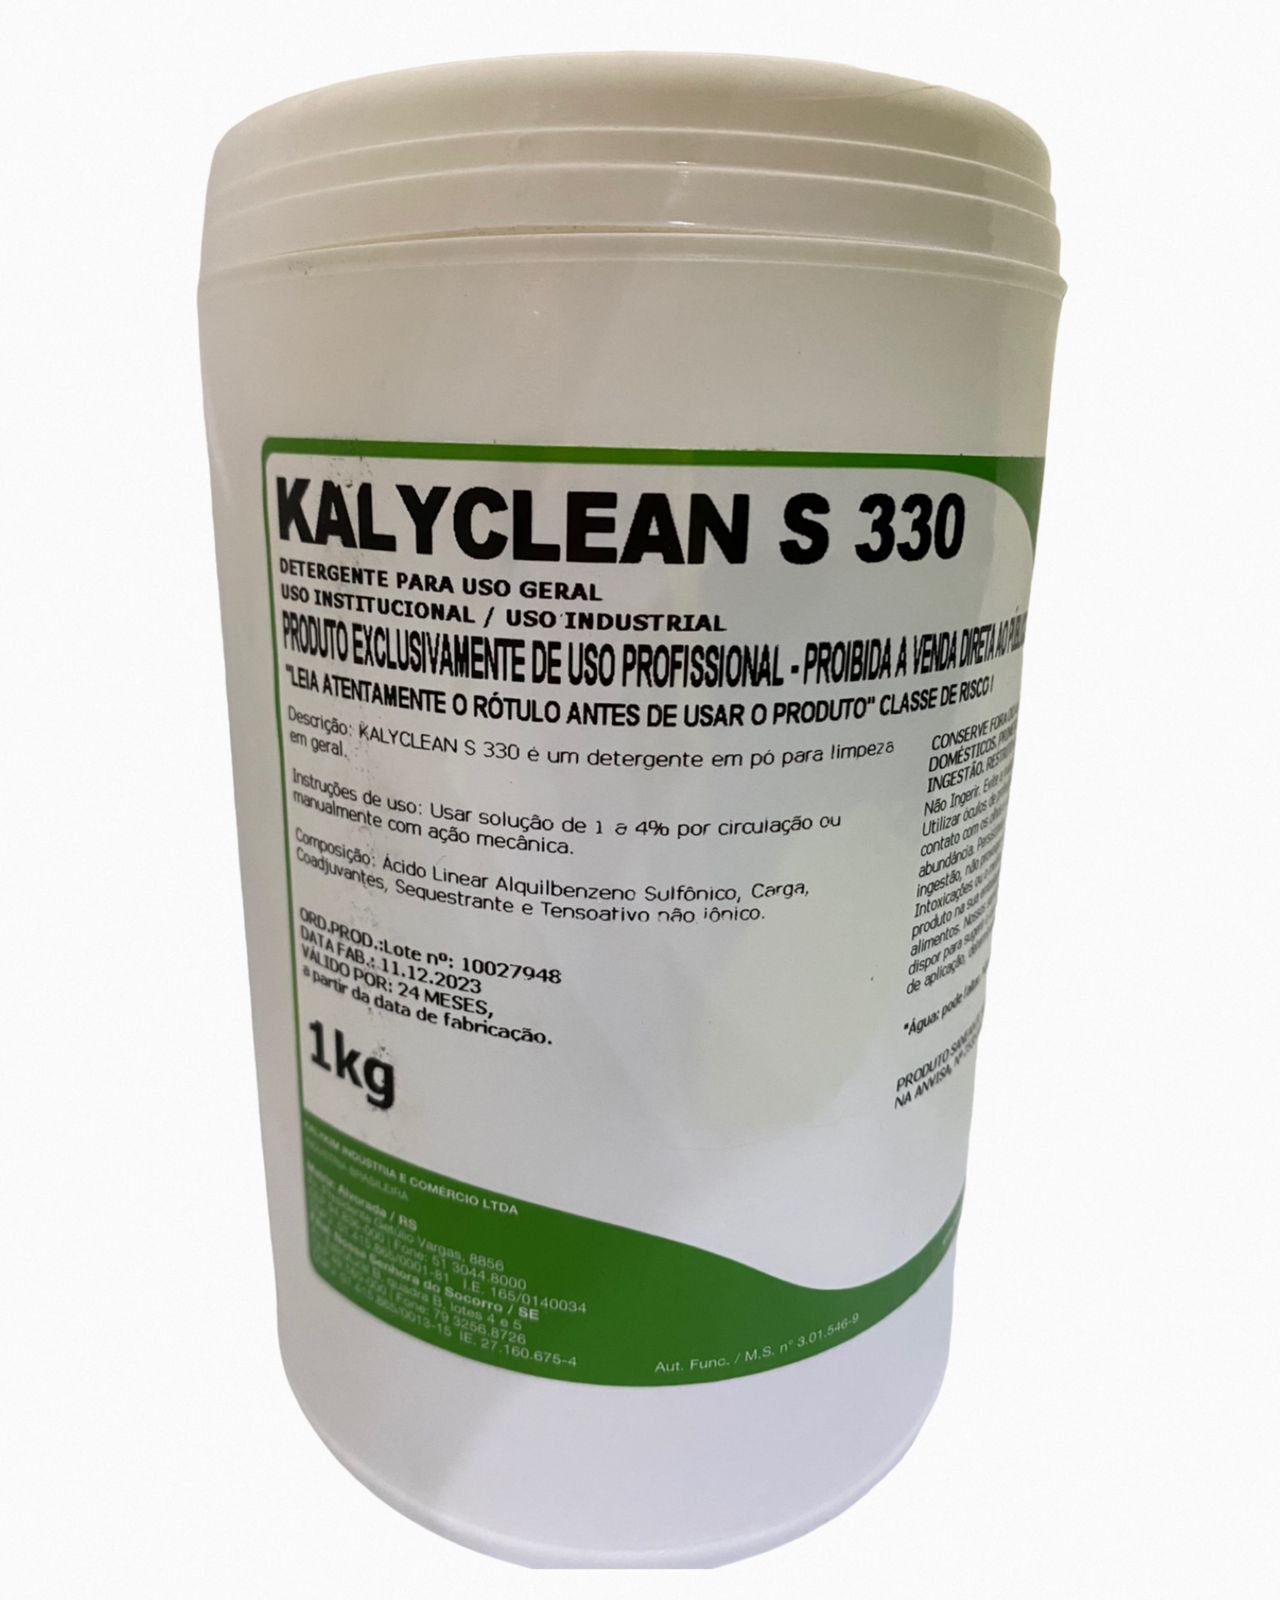 KalyClean S 330